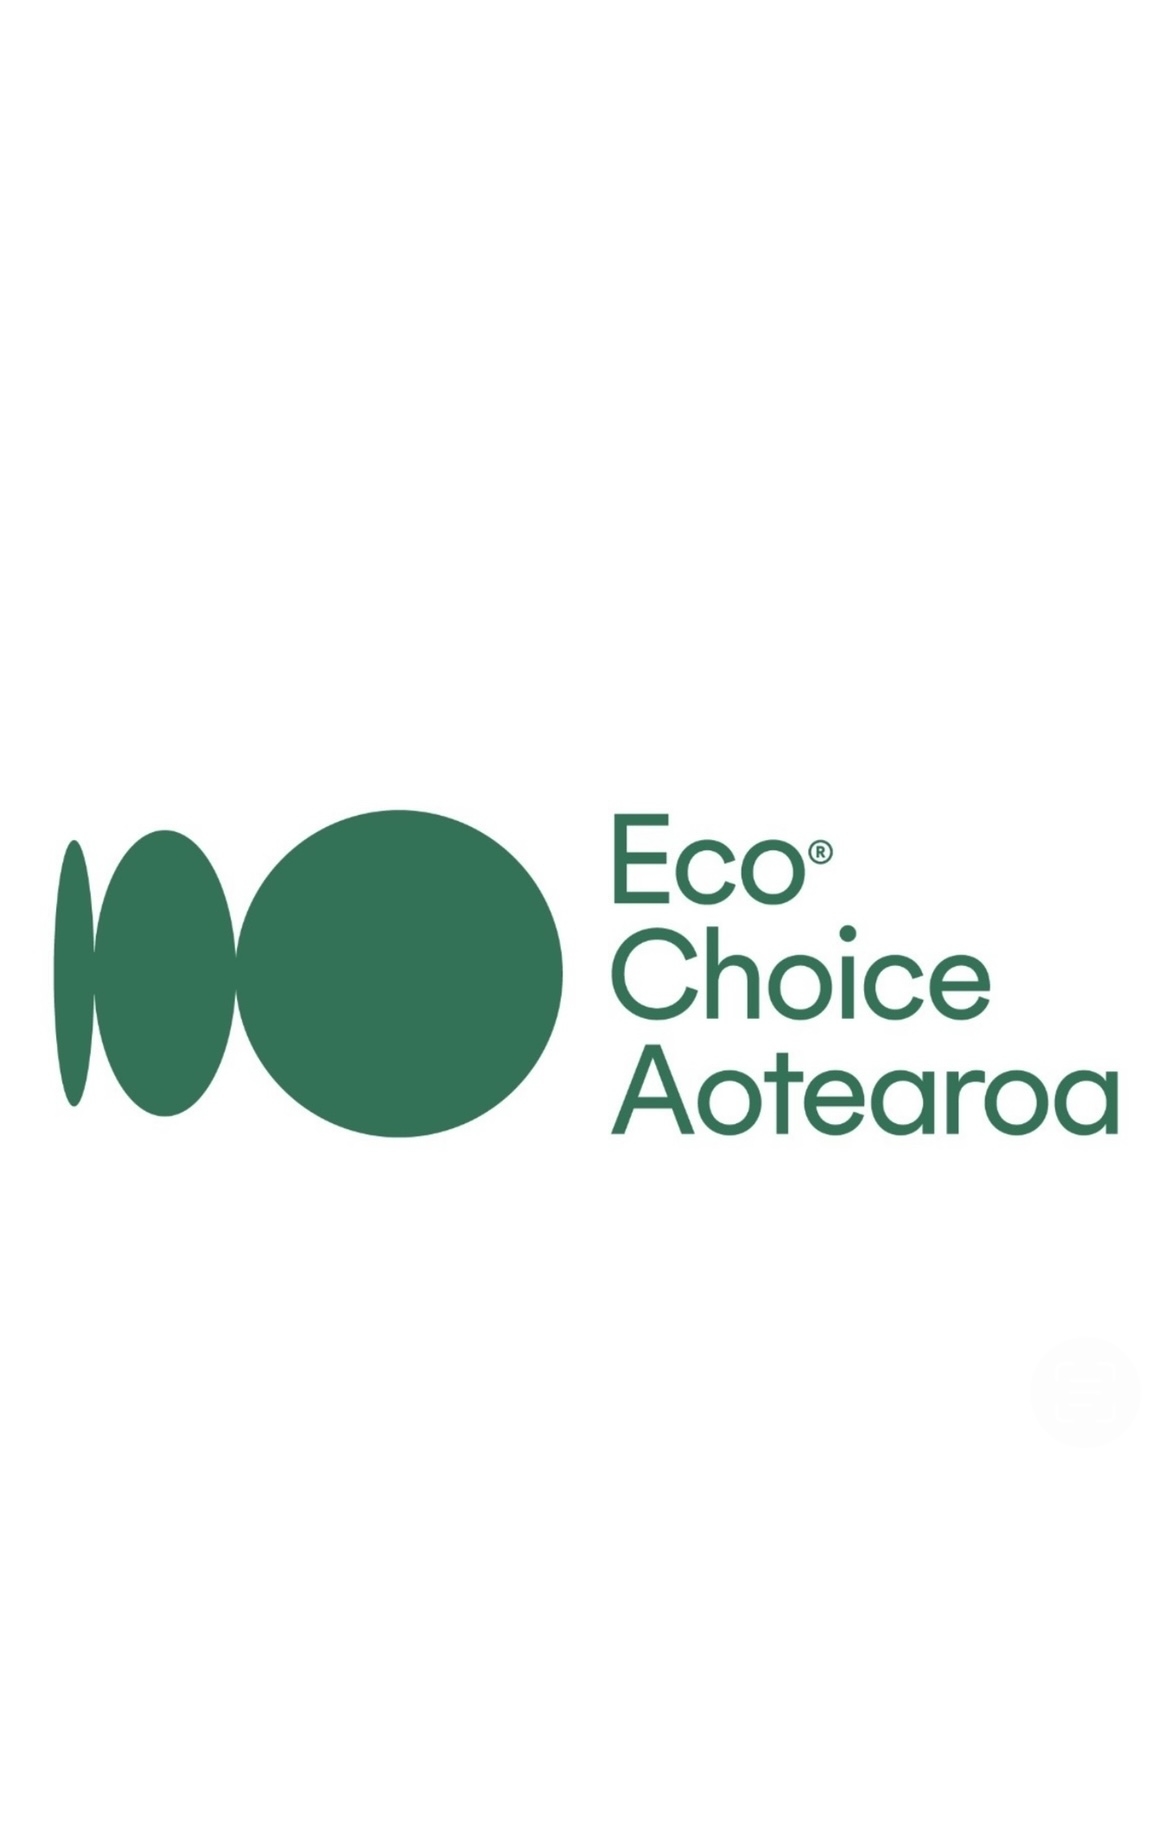 eco choice aotearoa